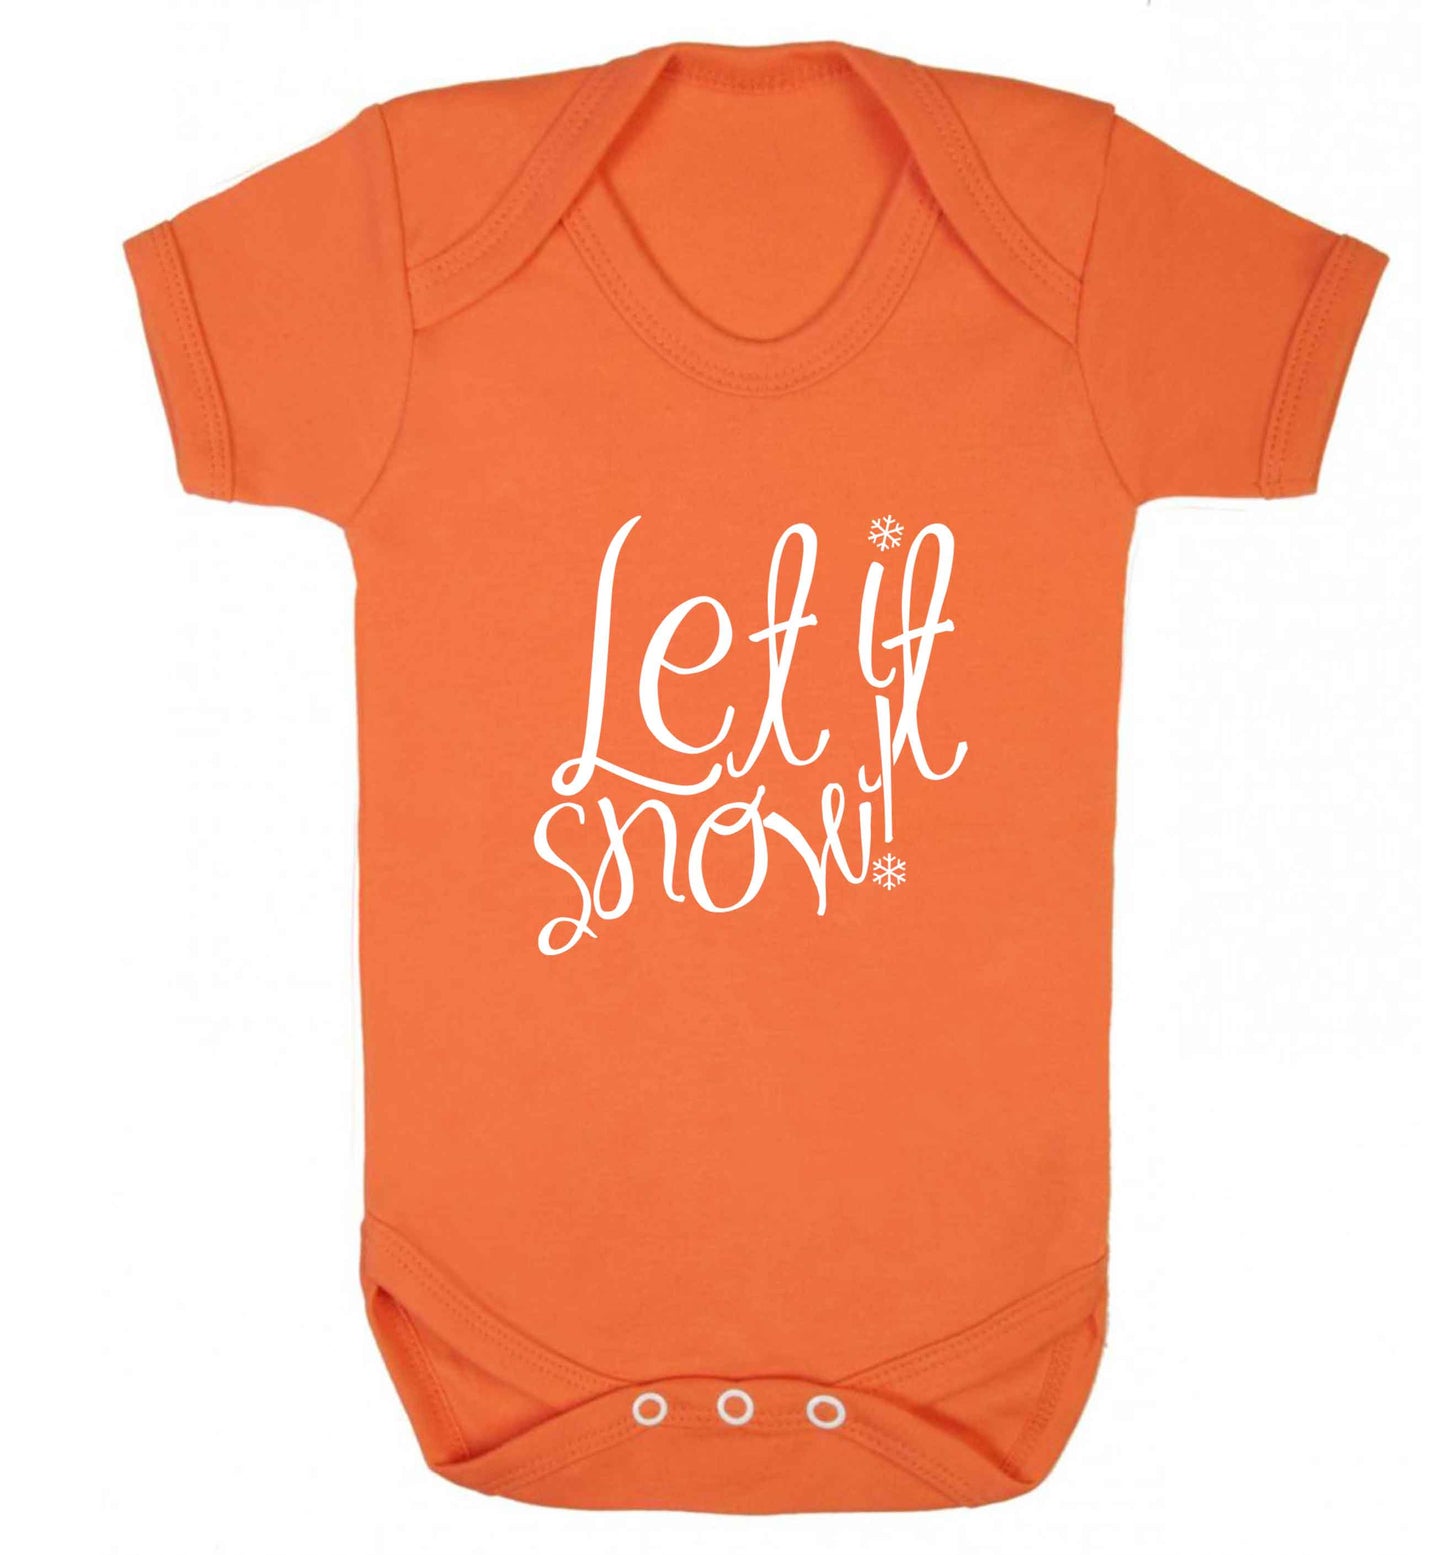 Let it snow baby vest orange 18-24 months